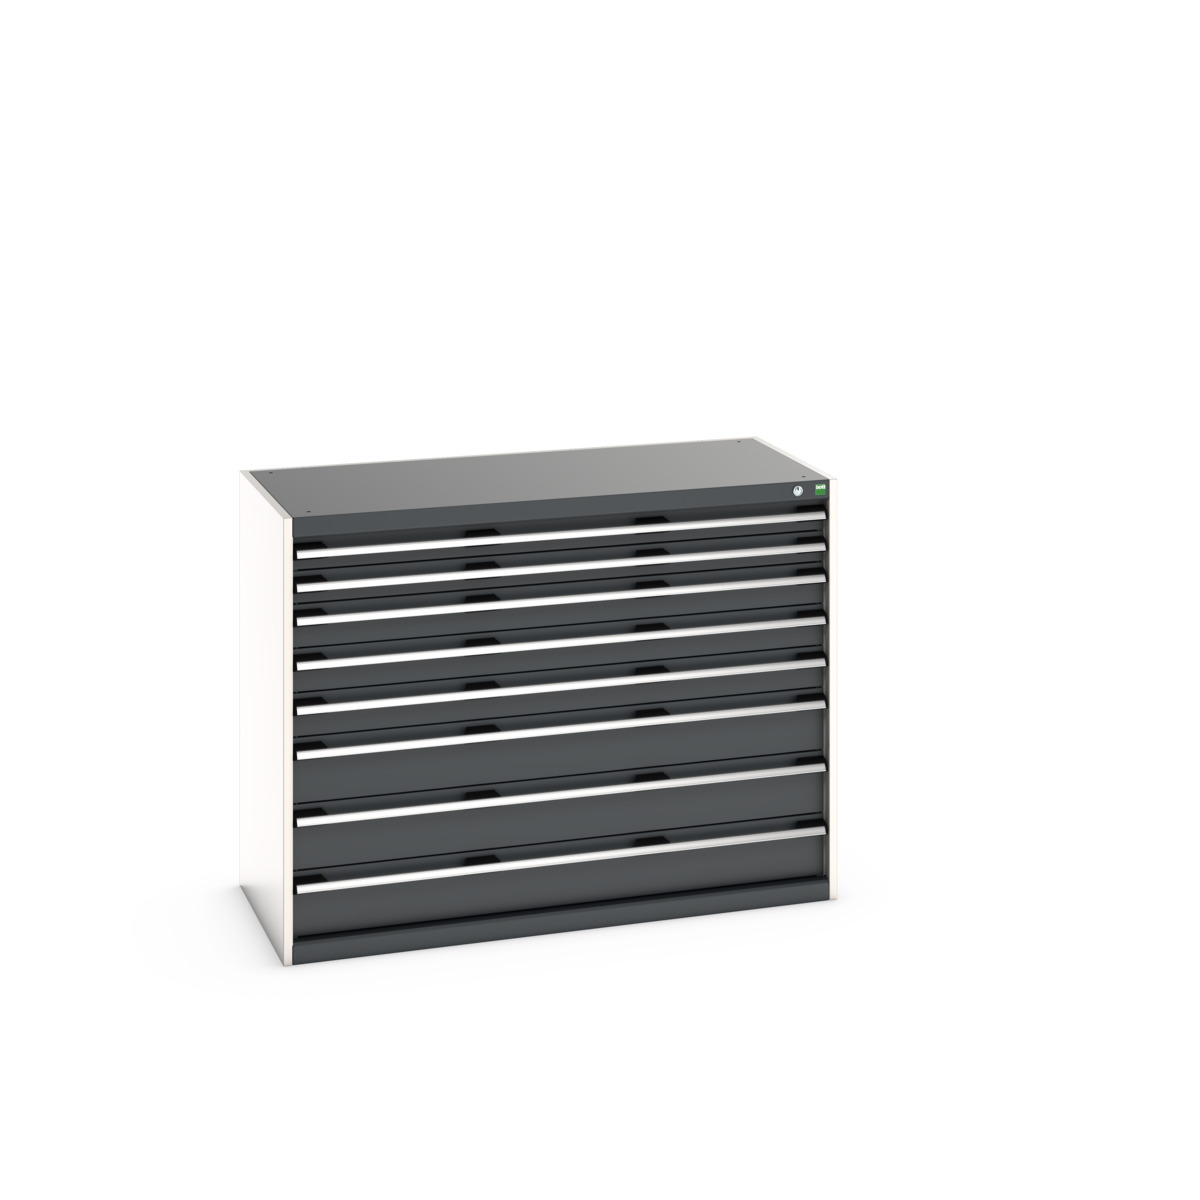 40022153. - cubio drawer cabinet